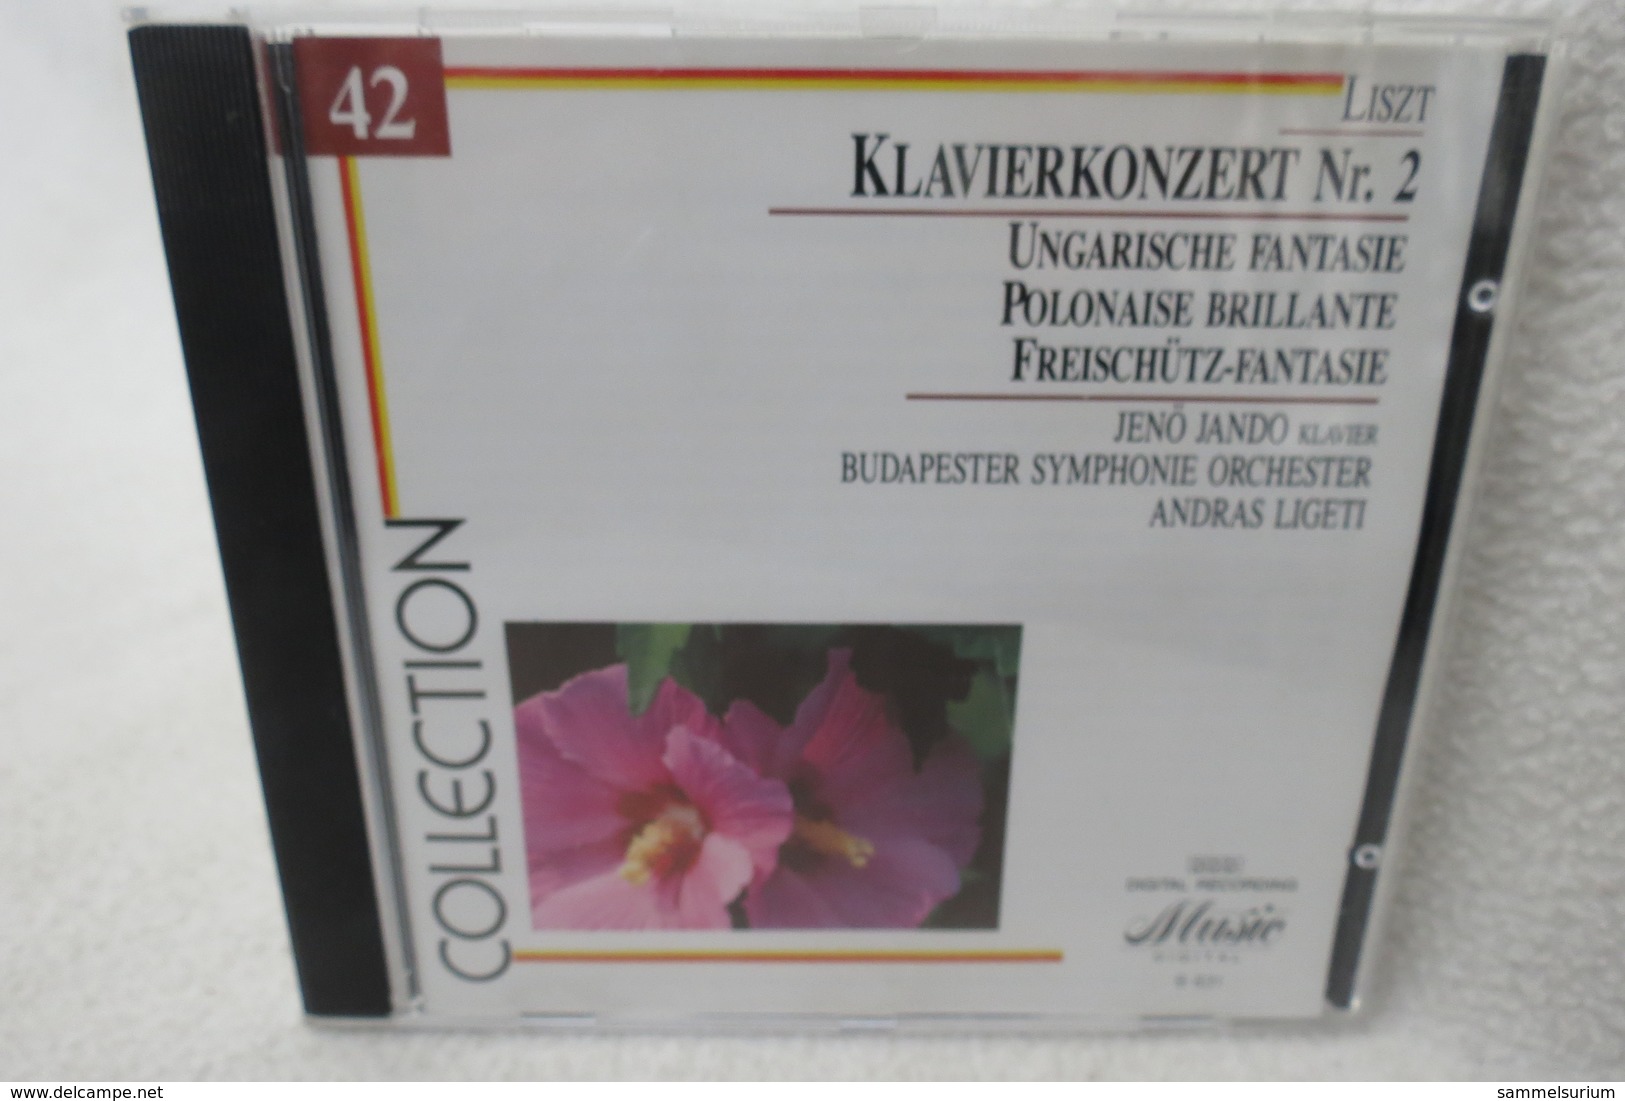 CD "Franz Liszt" Klavierkonzert Nr. 2 - Klassik